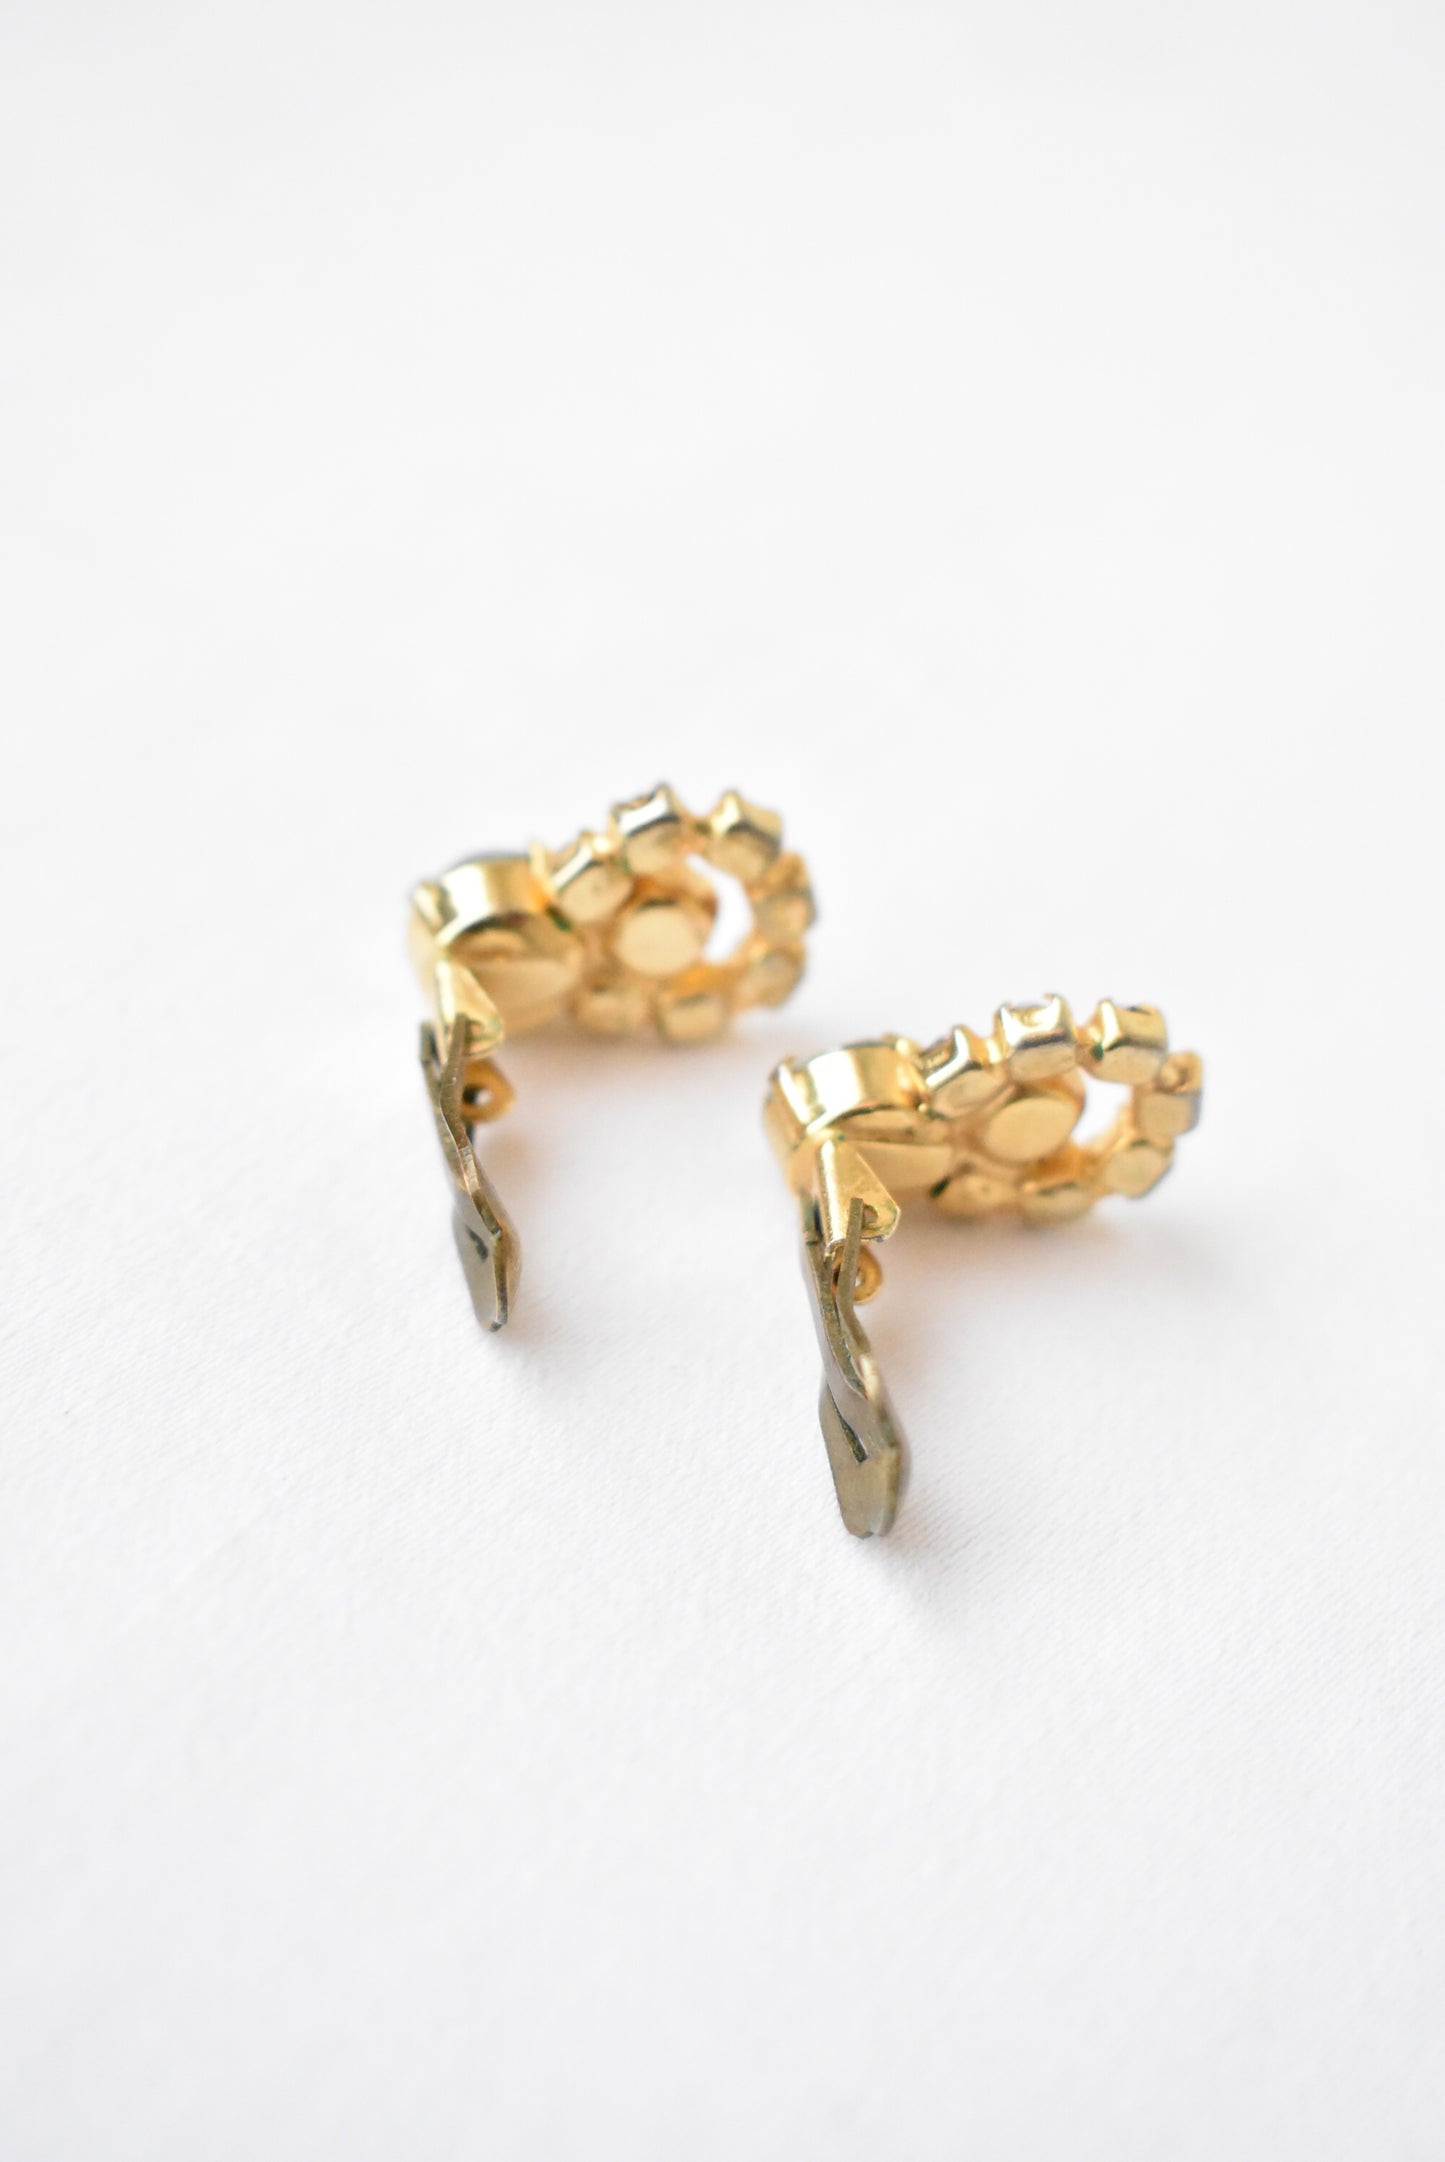 Stunning vintage diamante clip on earrings